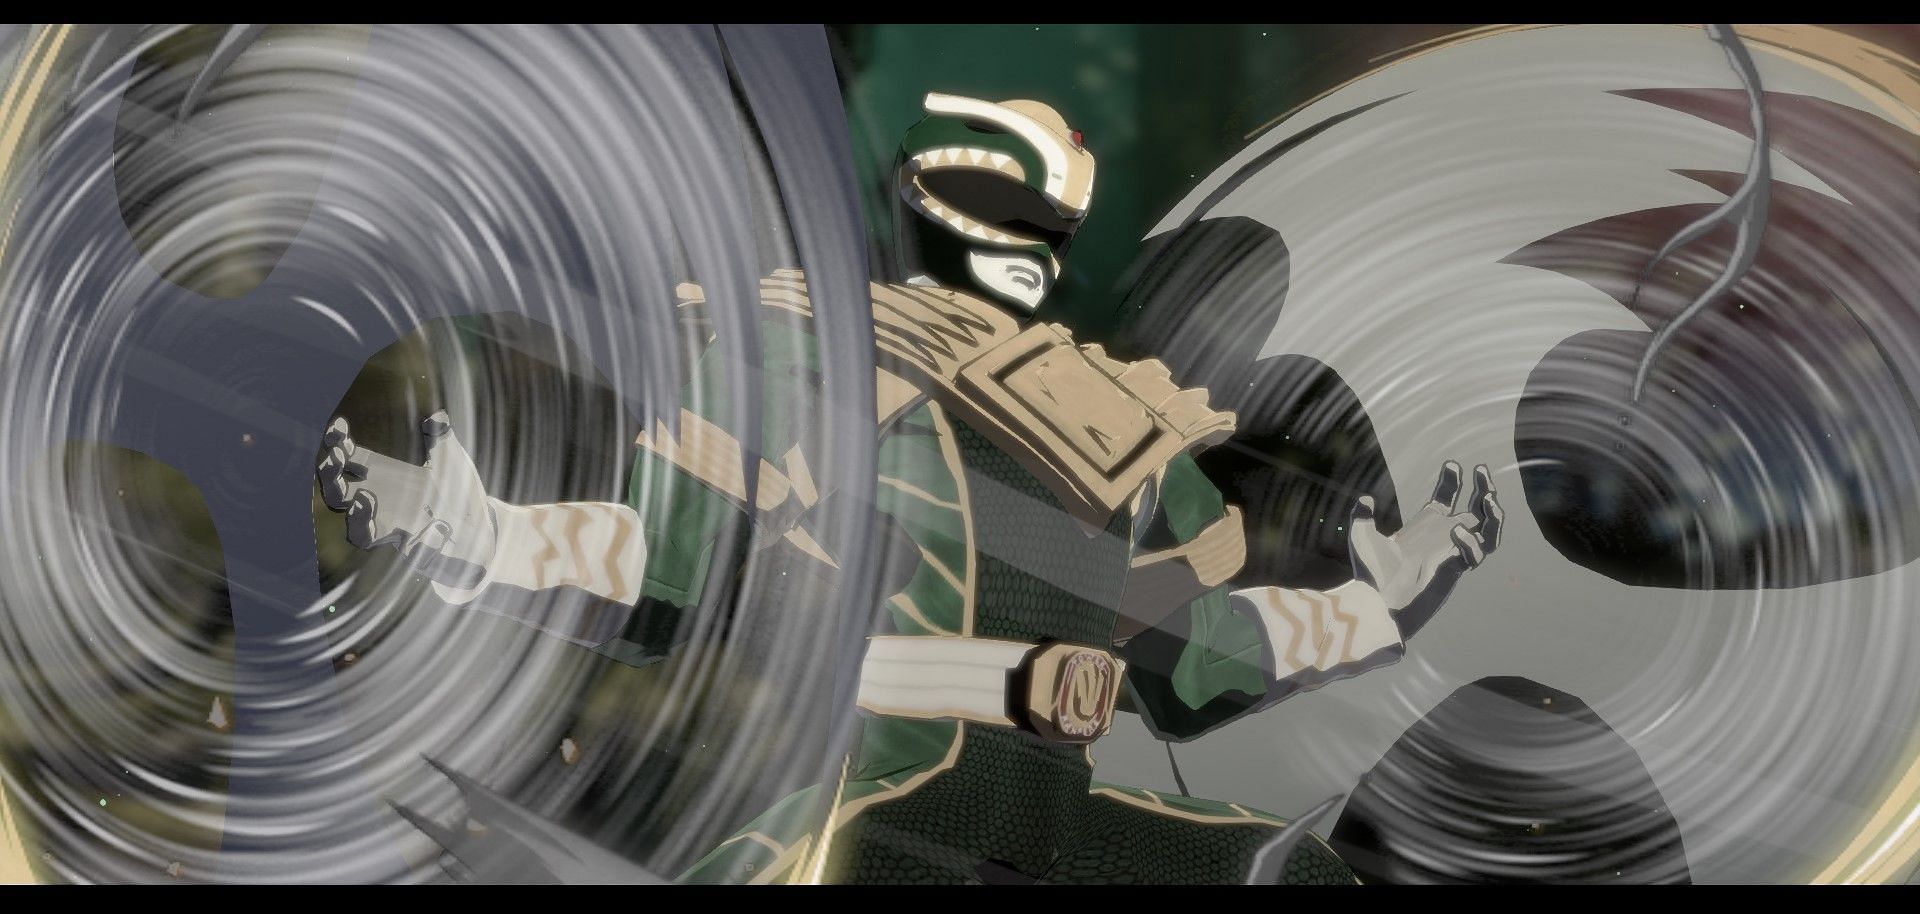 Turn Leo into Green Ranger in Guilty Gear: Strive (Image credits: monkeygigabuster)